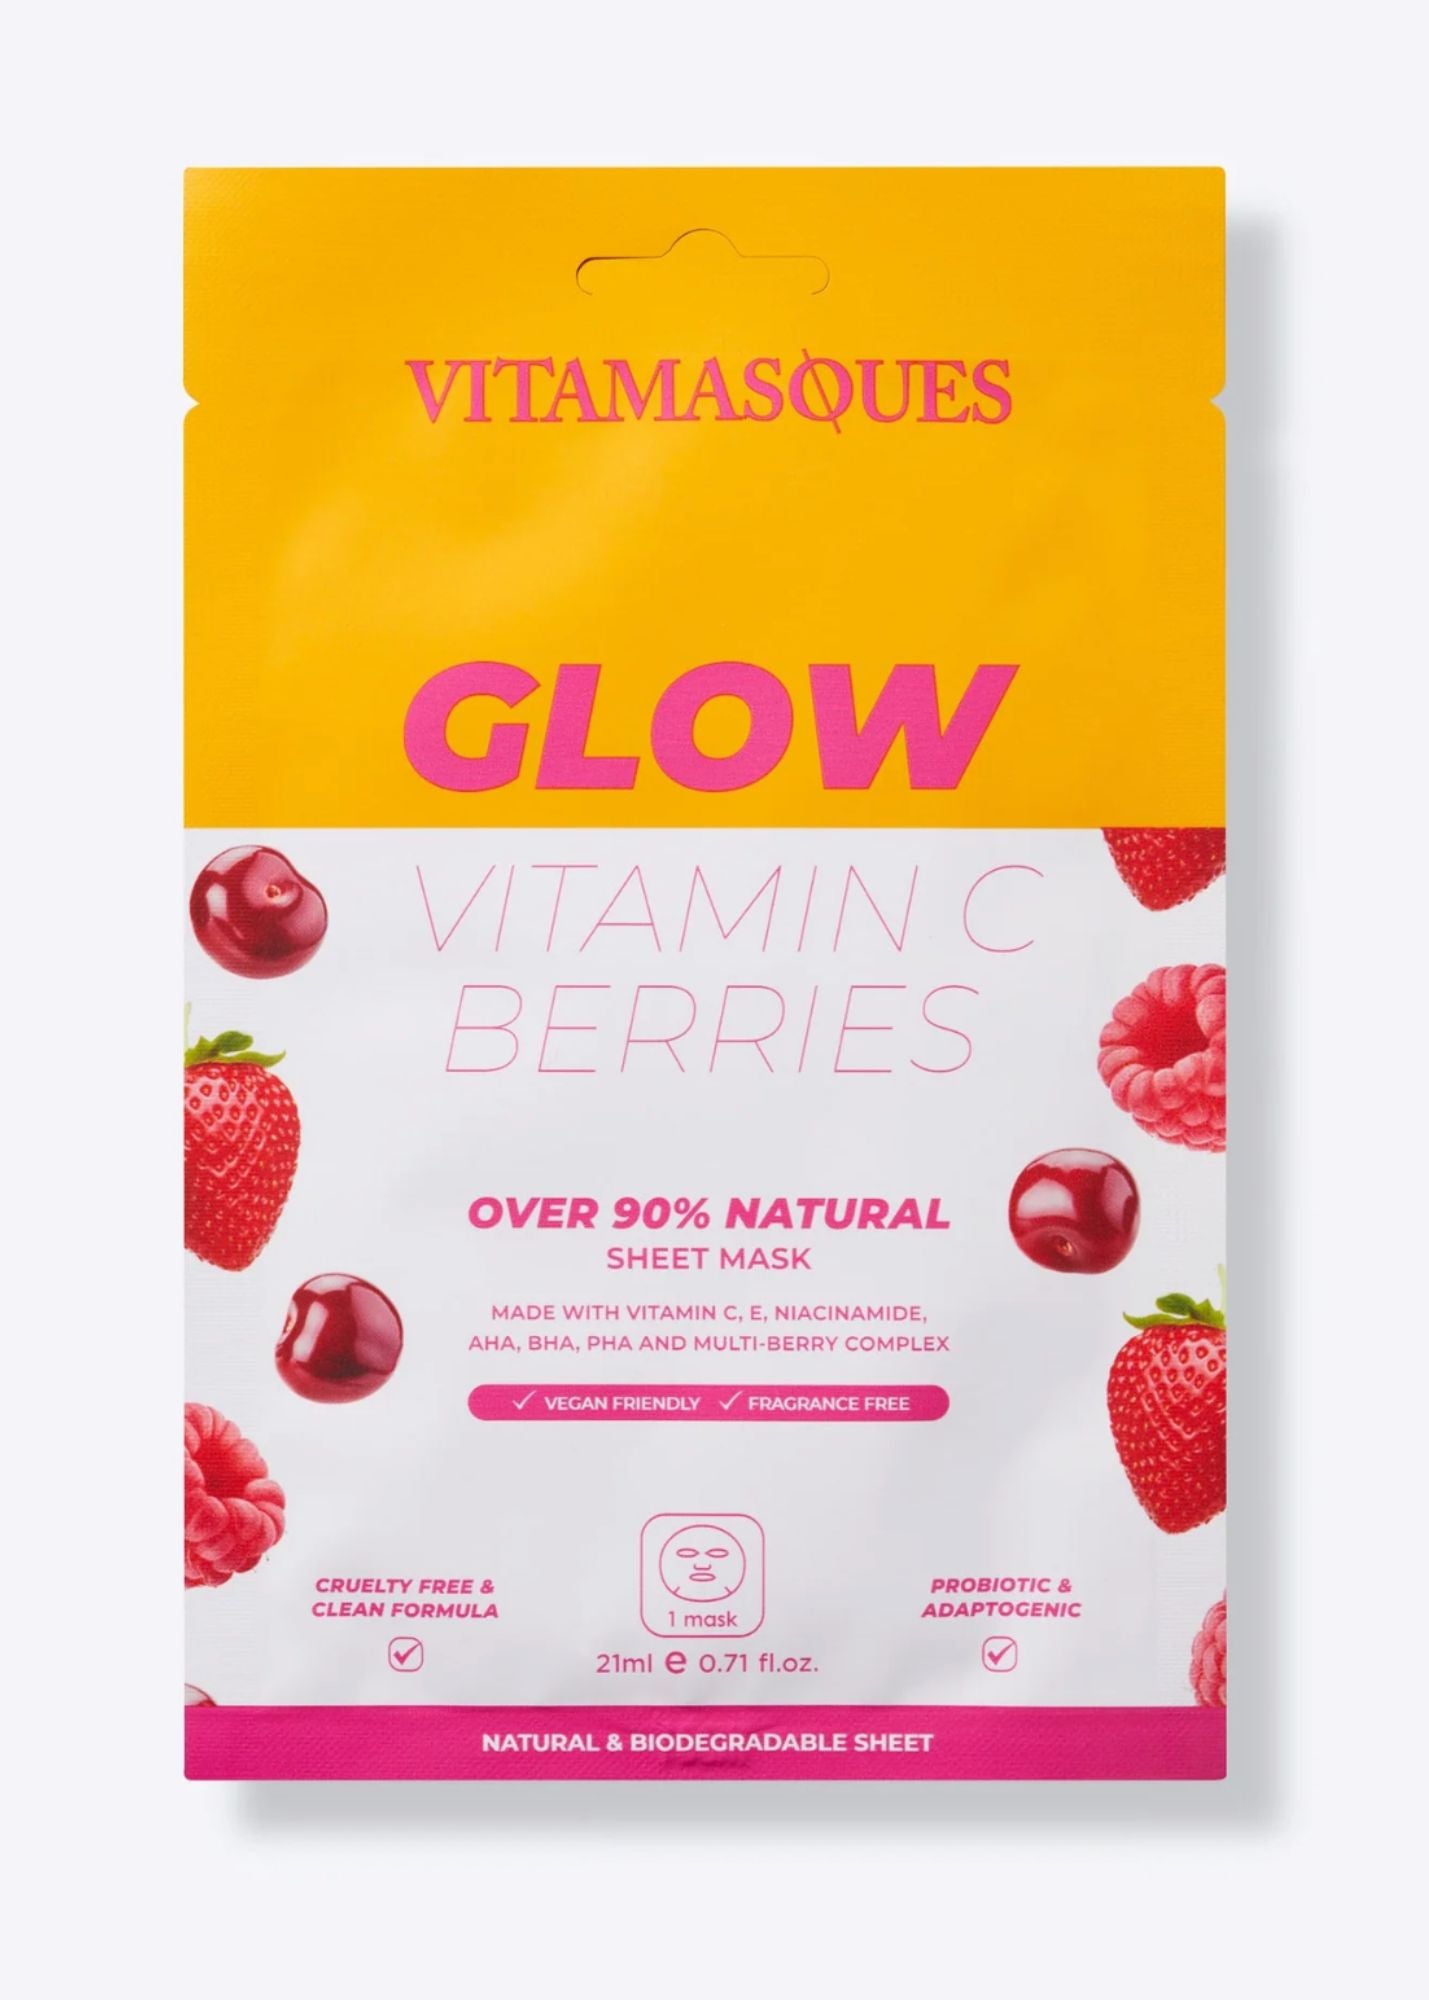 Glow Vitamin C Berries Sheet Face Mask Gifts